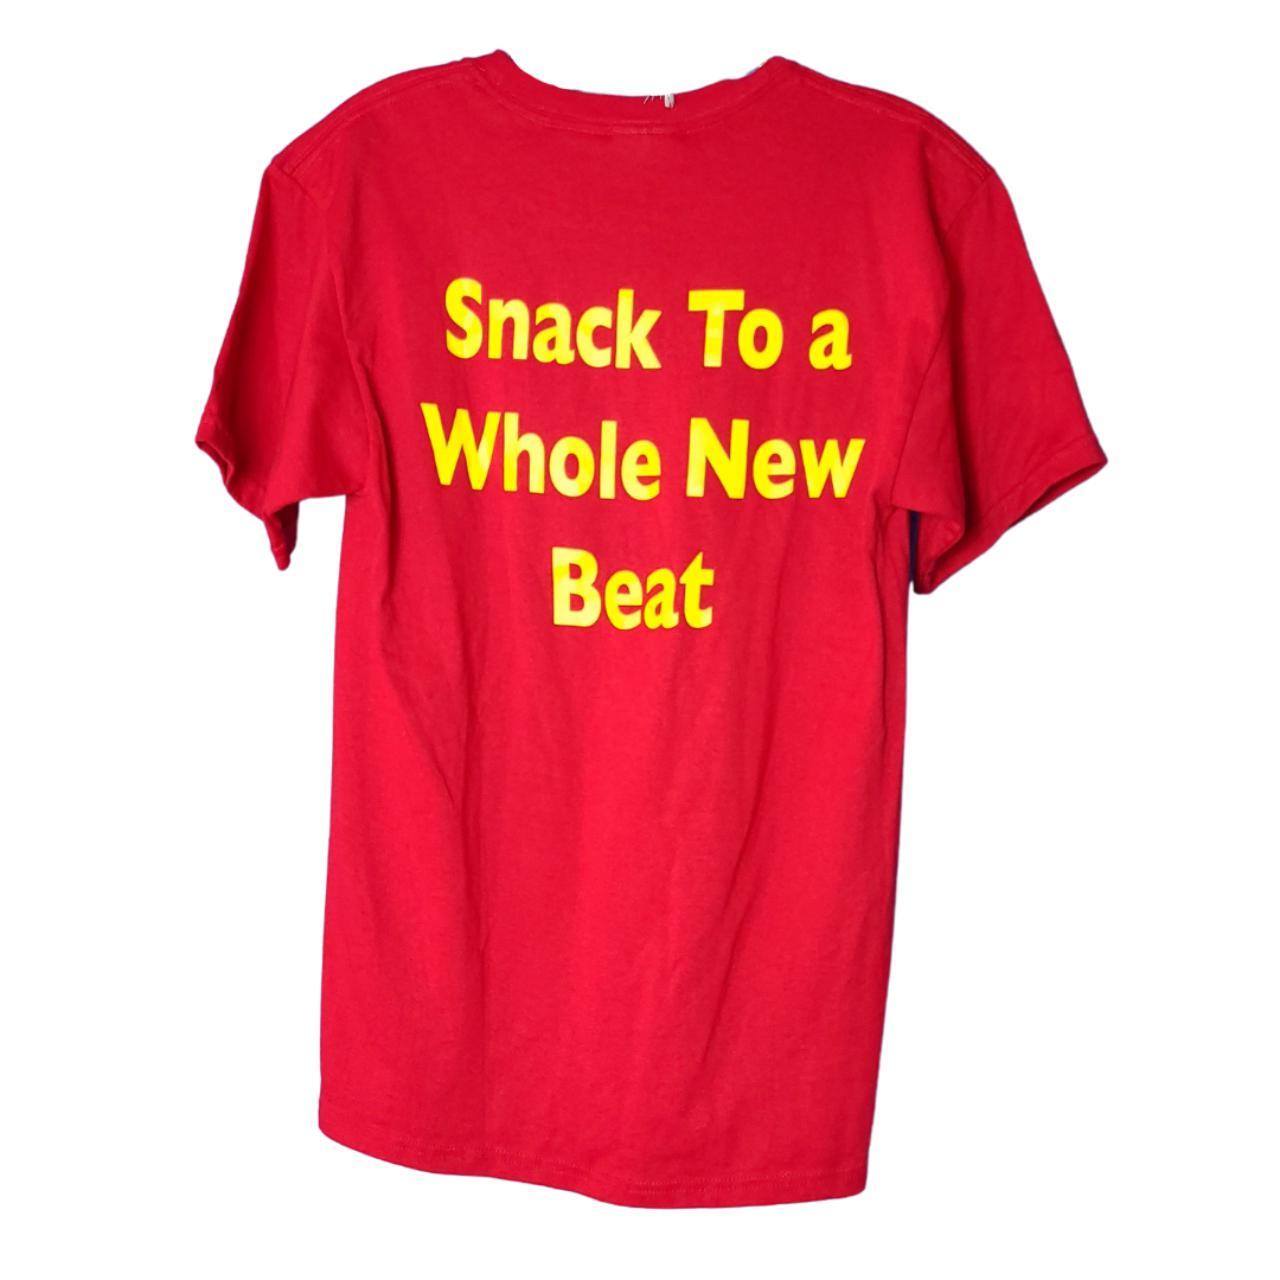 Product Image 2 - Pringles Stix Snack T-Shirt

Details: 
Size: